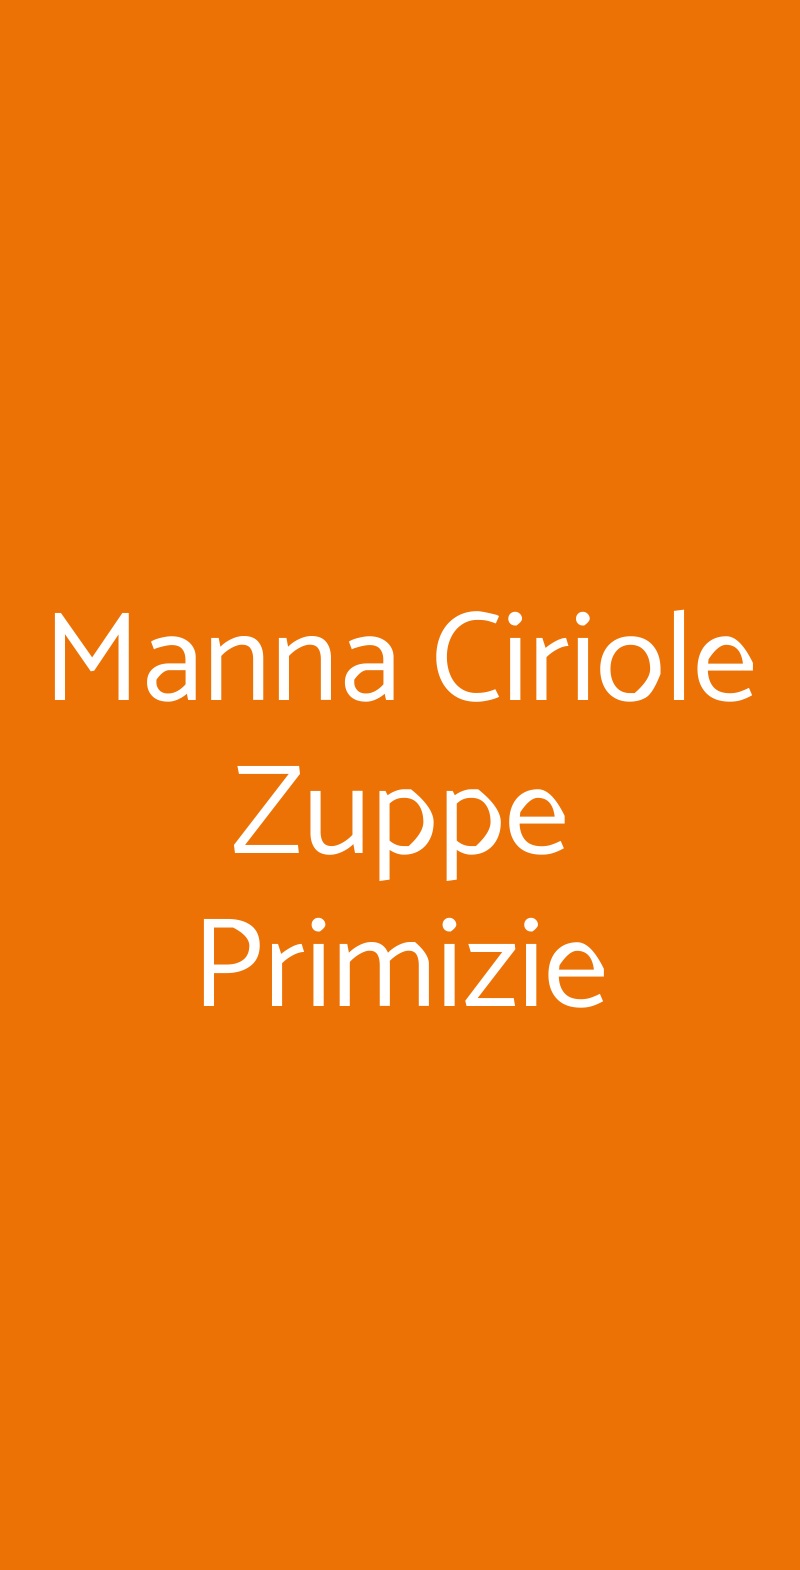 Manna Ciriole Zuppe Primizie Roma menù 1 pagina